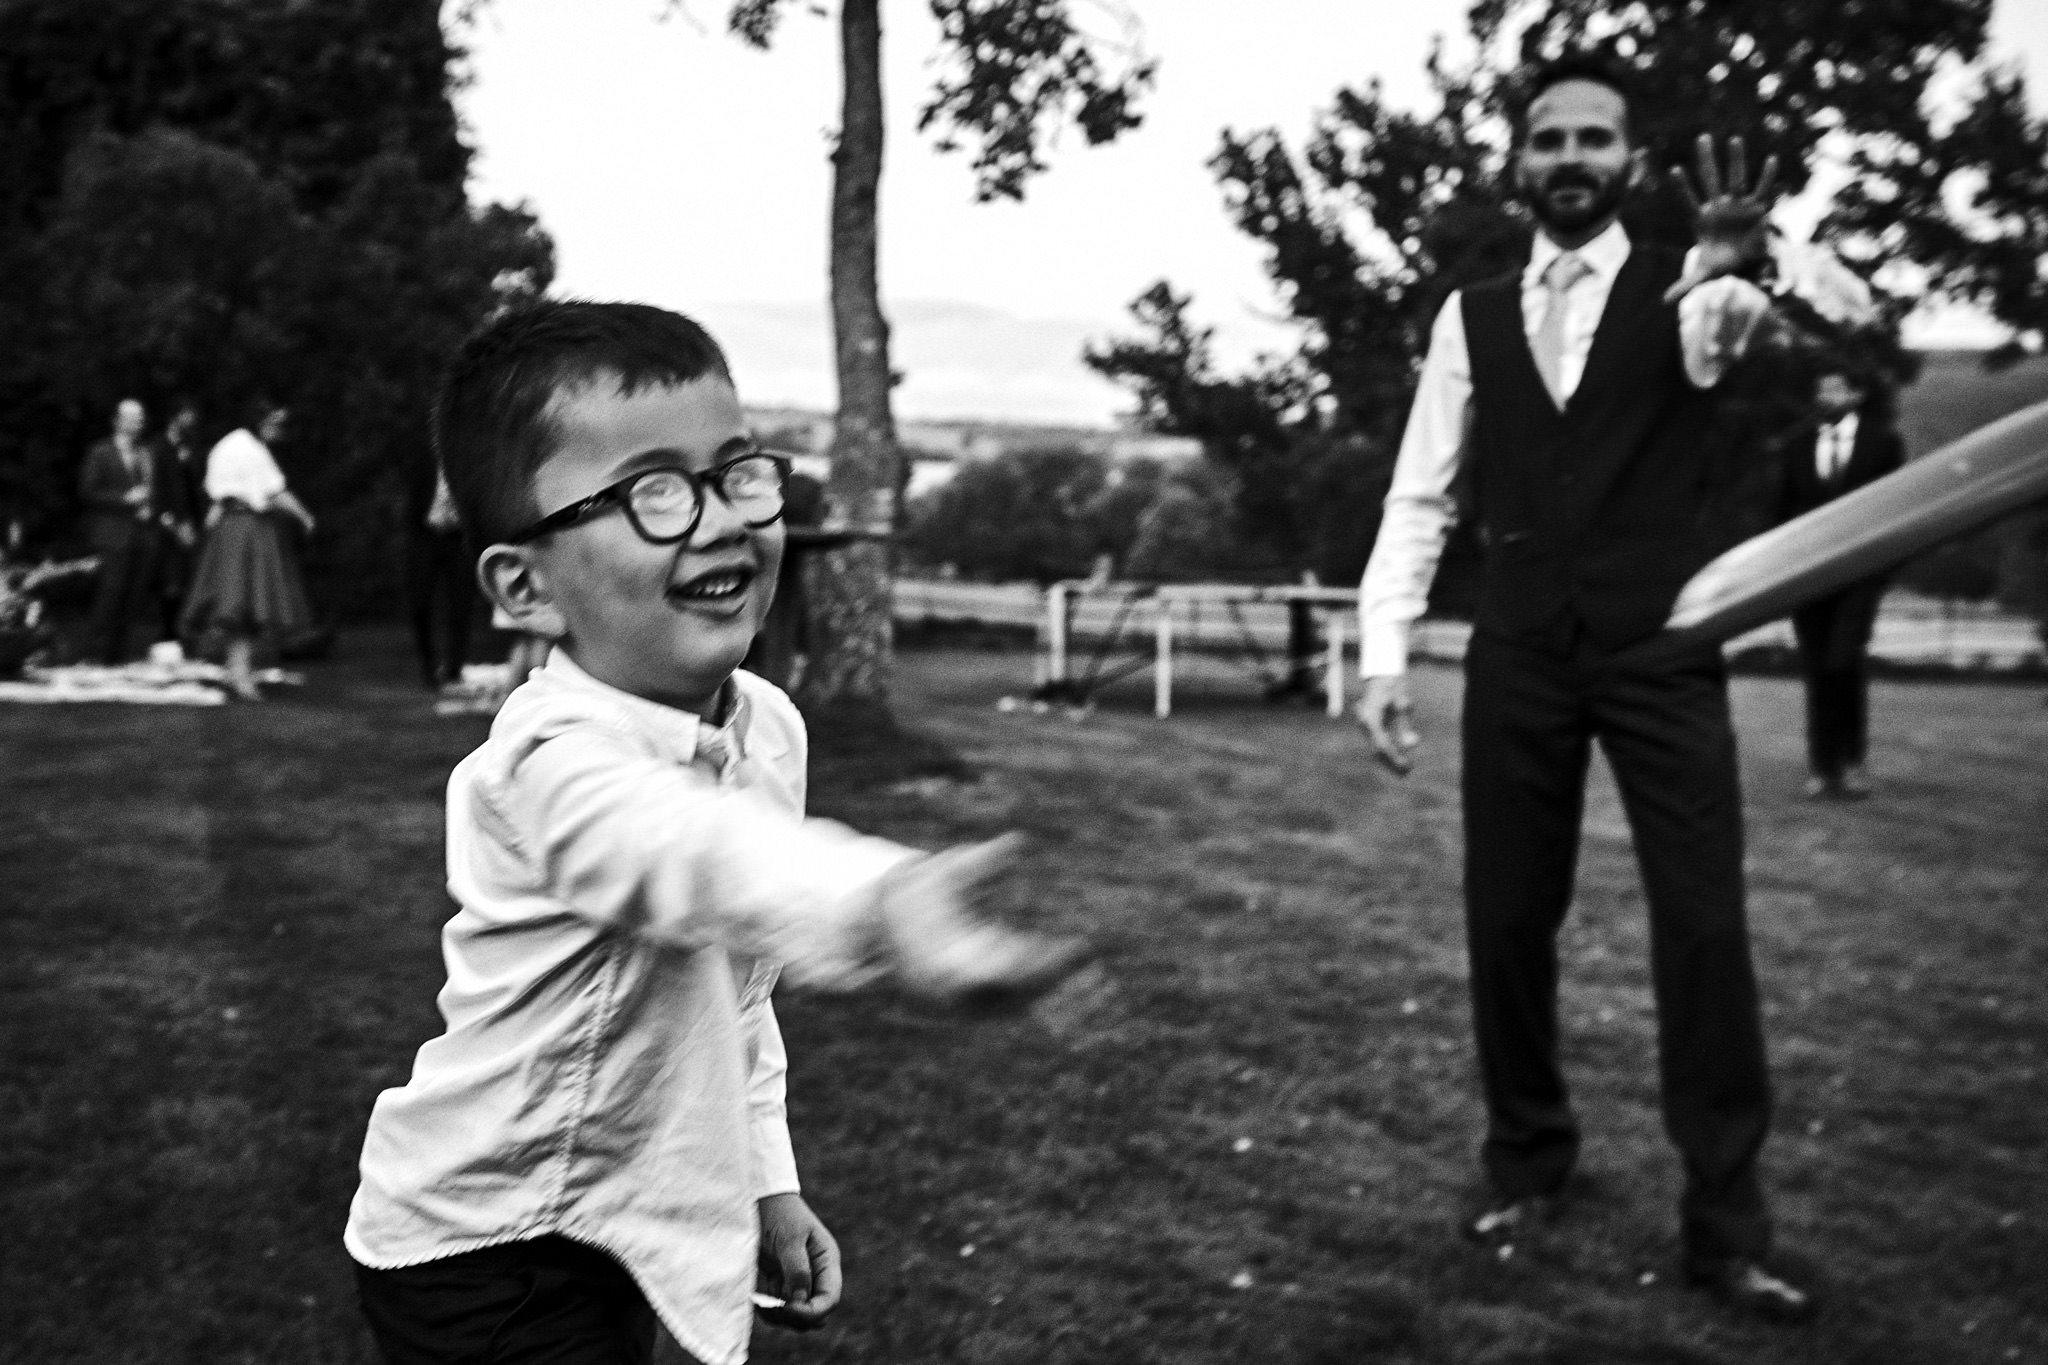 Kid throws frisbee during wedding reception